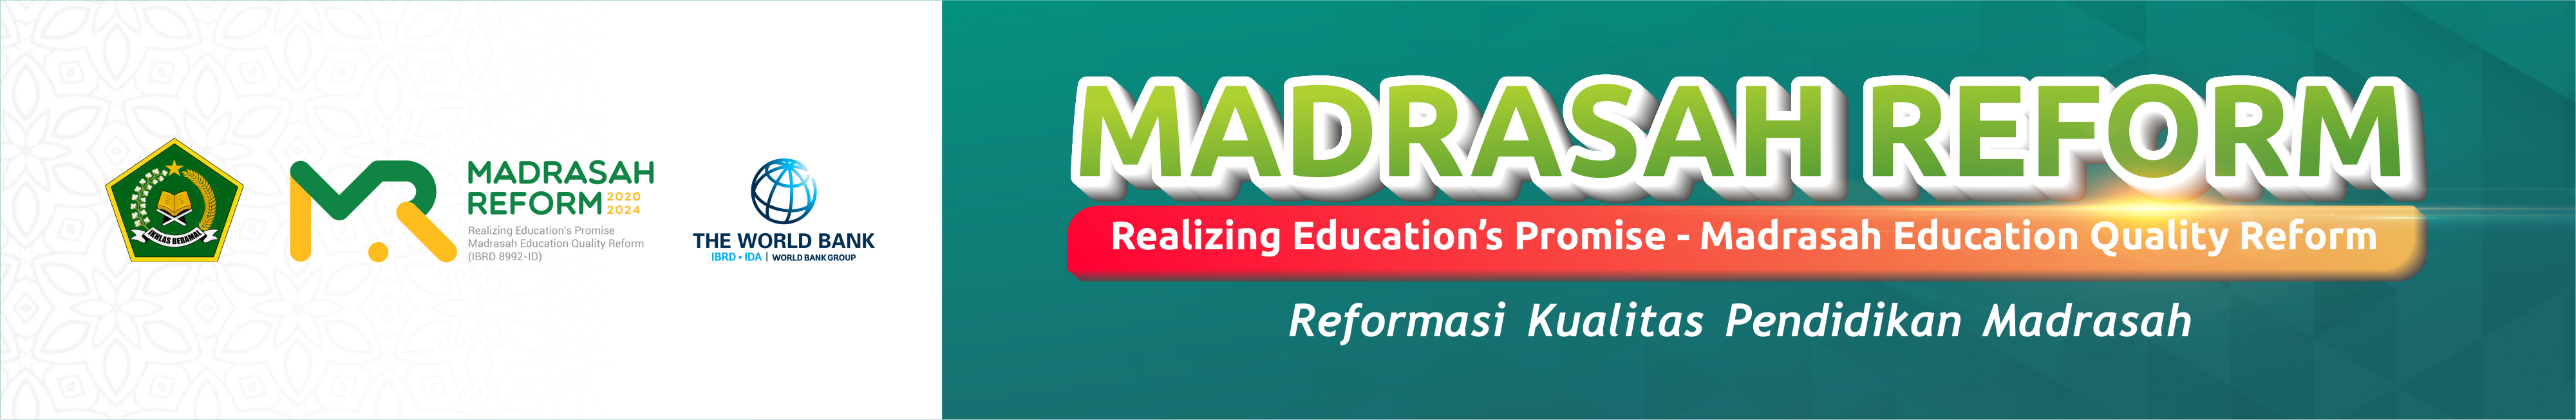 Madrasah Reform